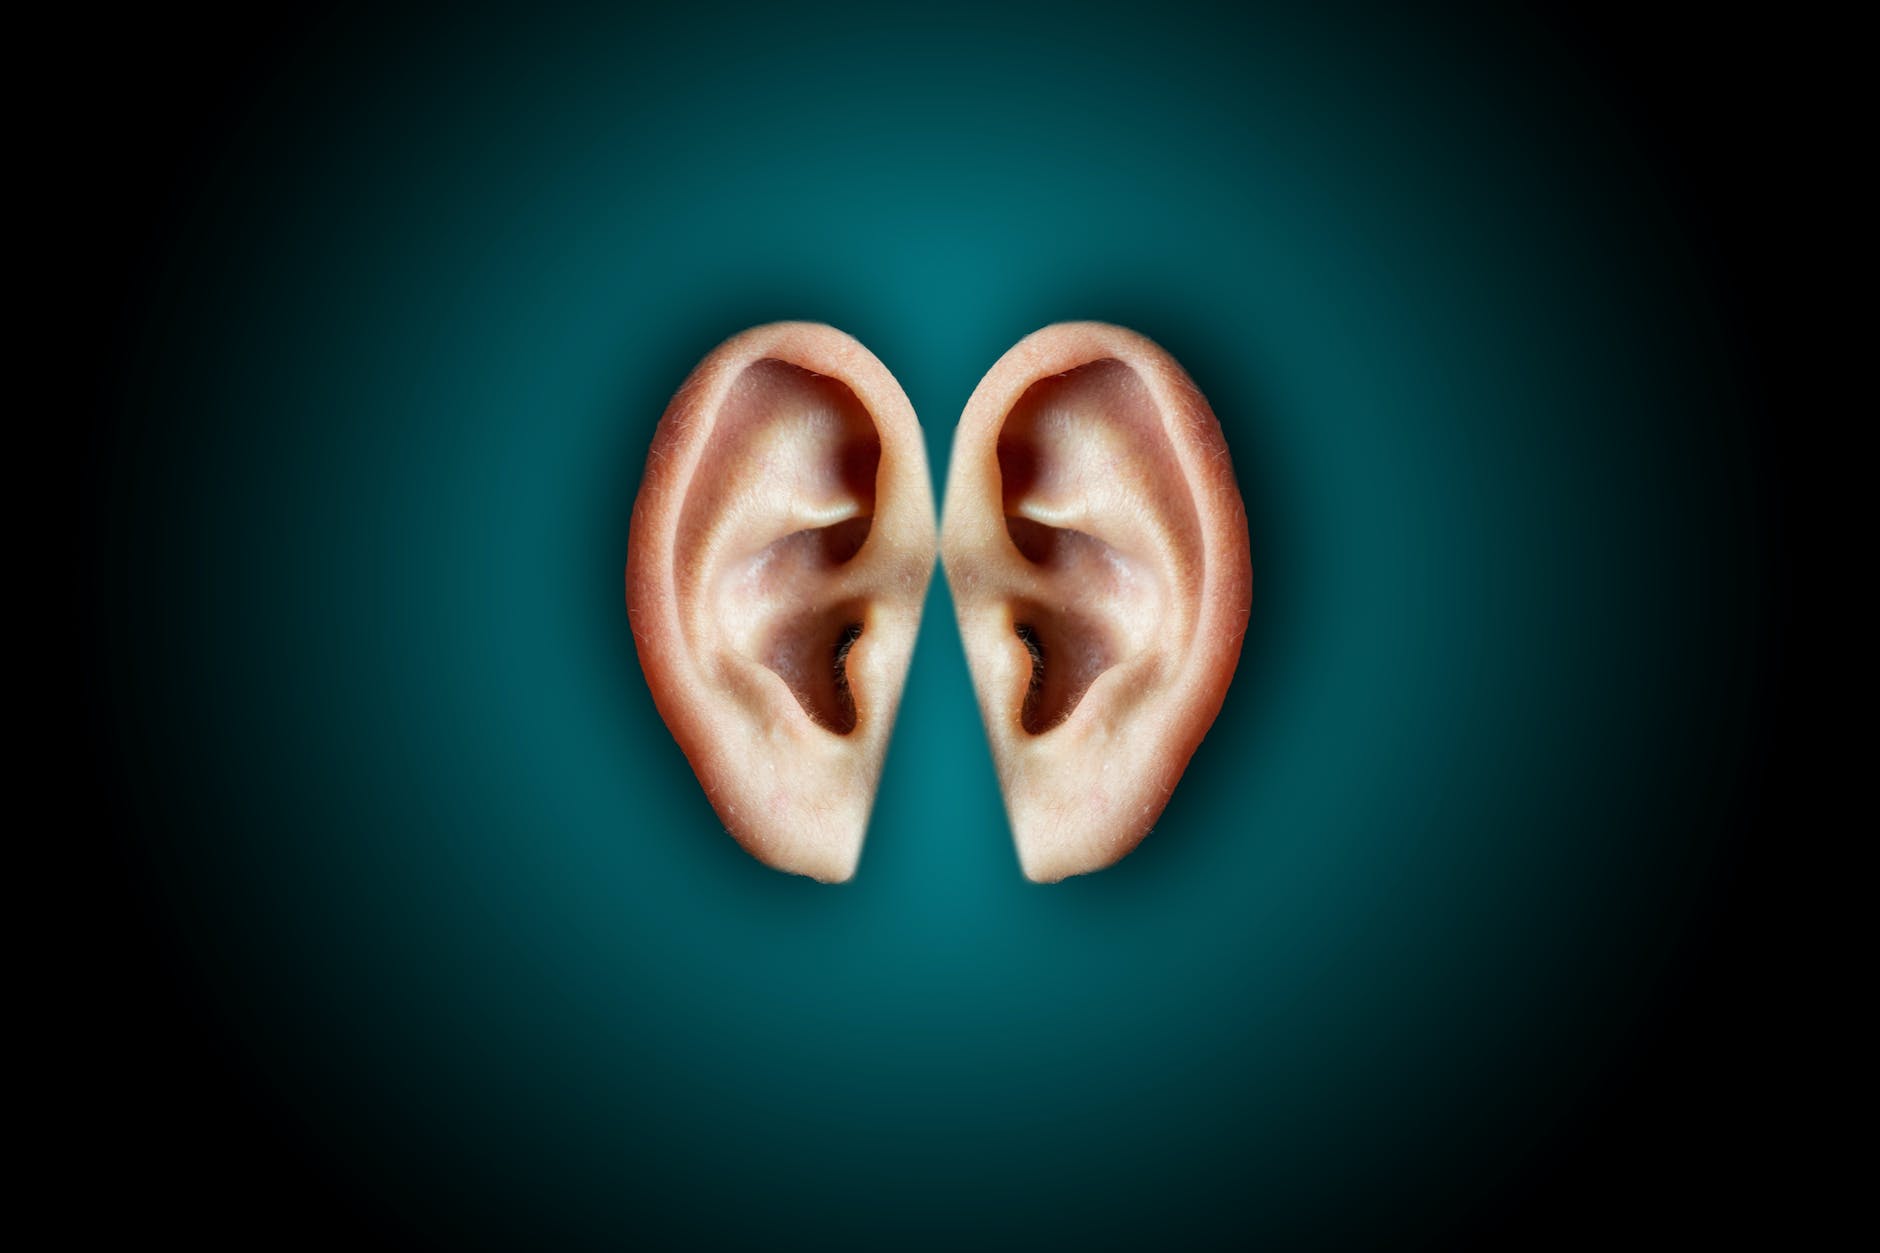 creative shot of human ears on dark background